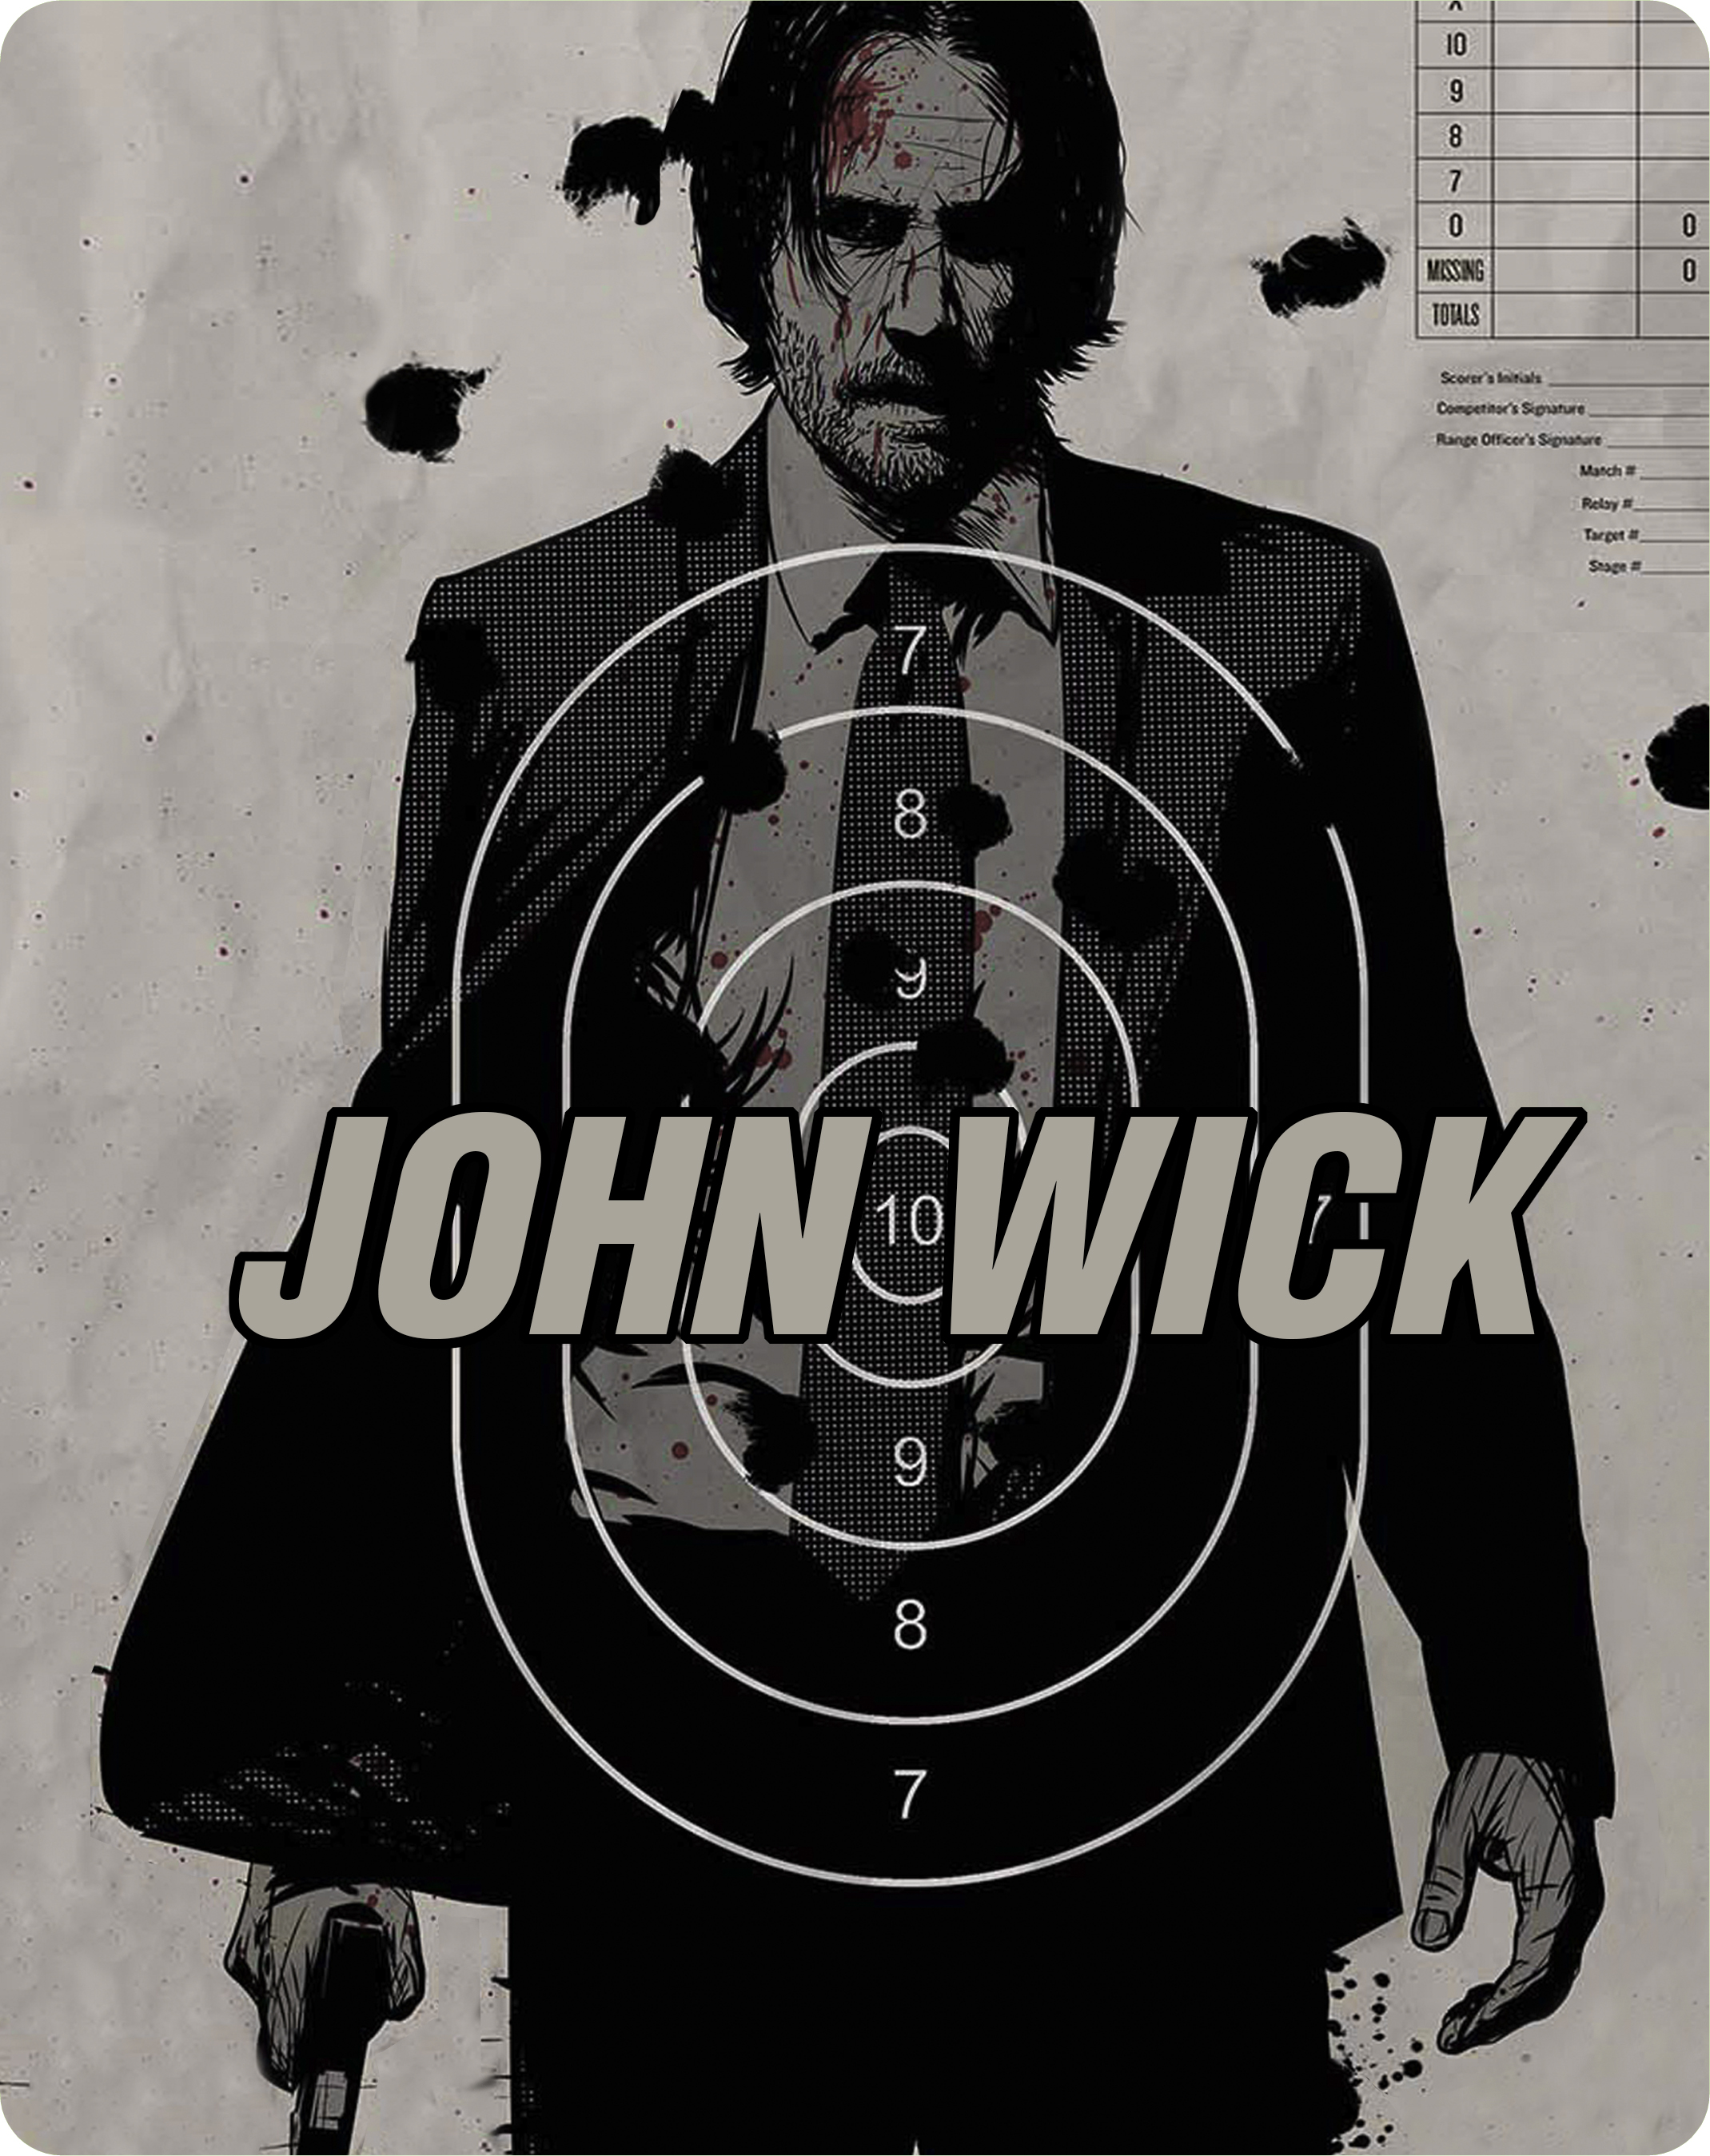 KEANU REEVES John Wick ( 2014, DVD) Action Adventure: 1st Movie